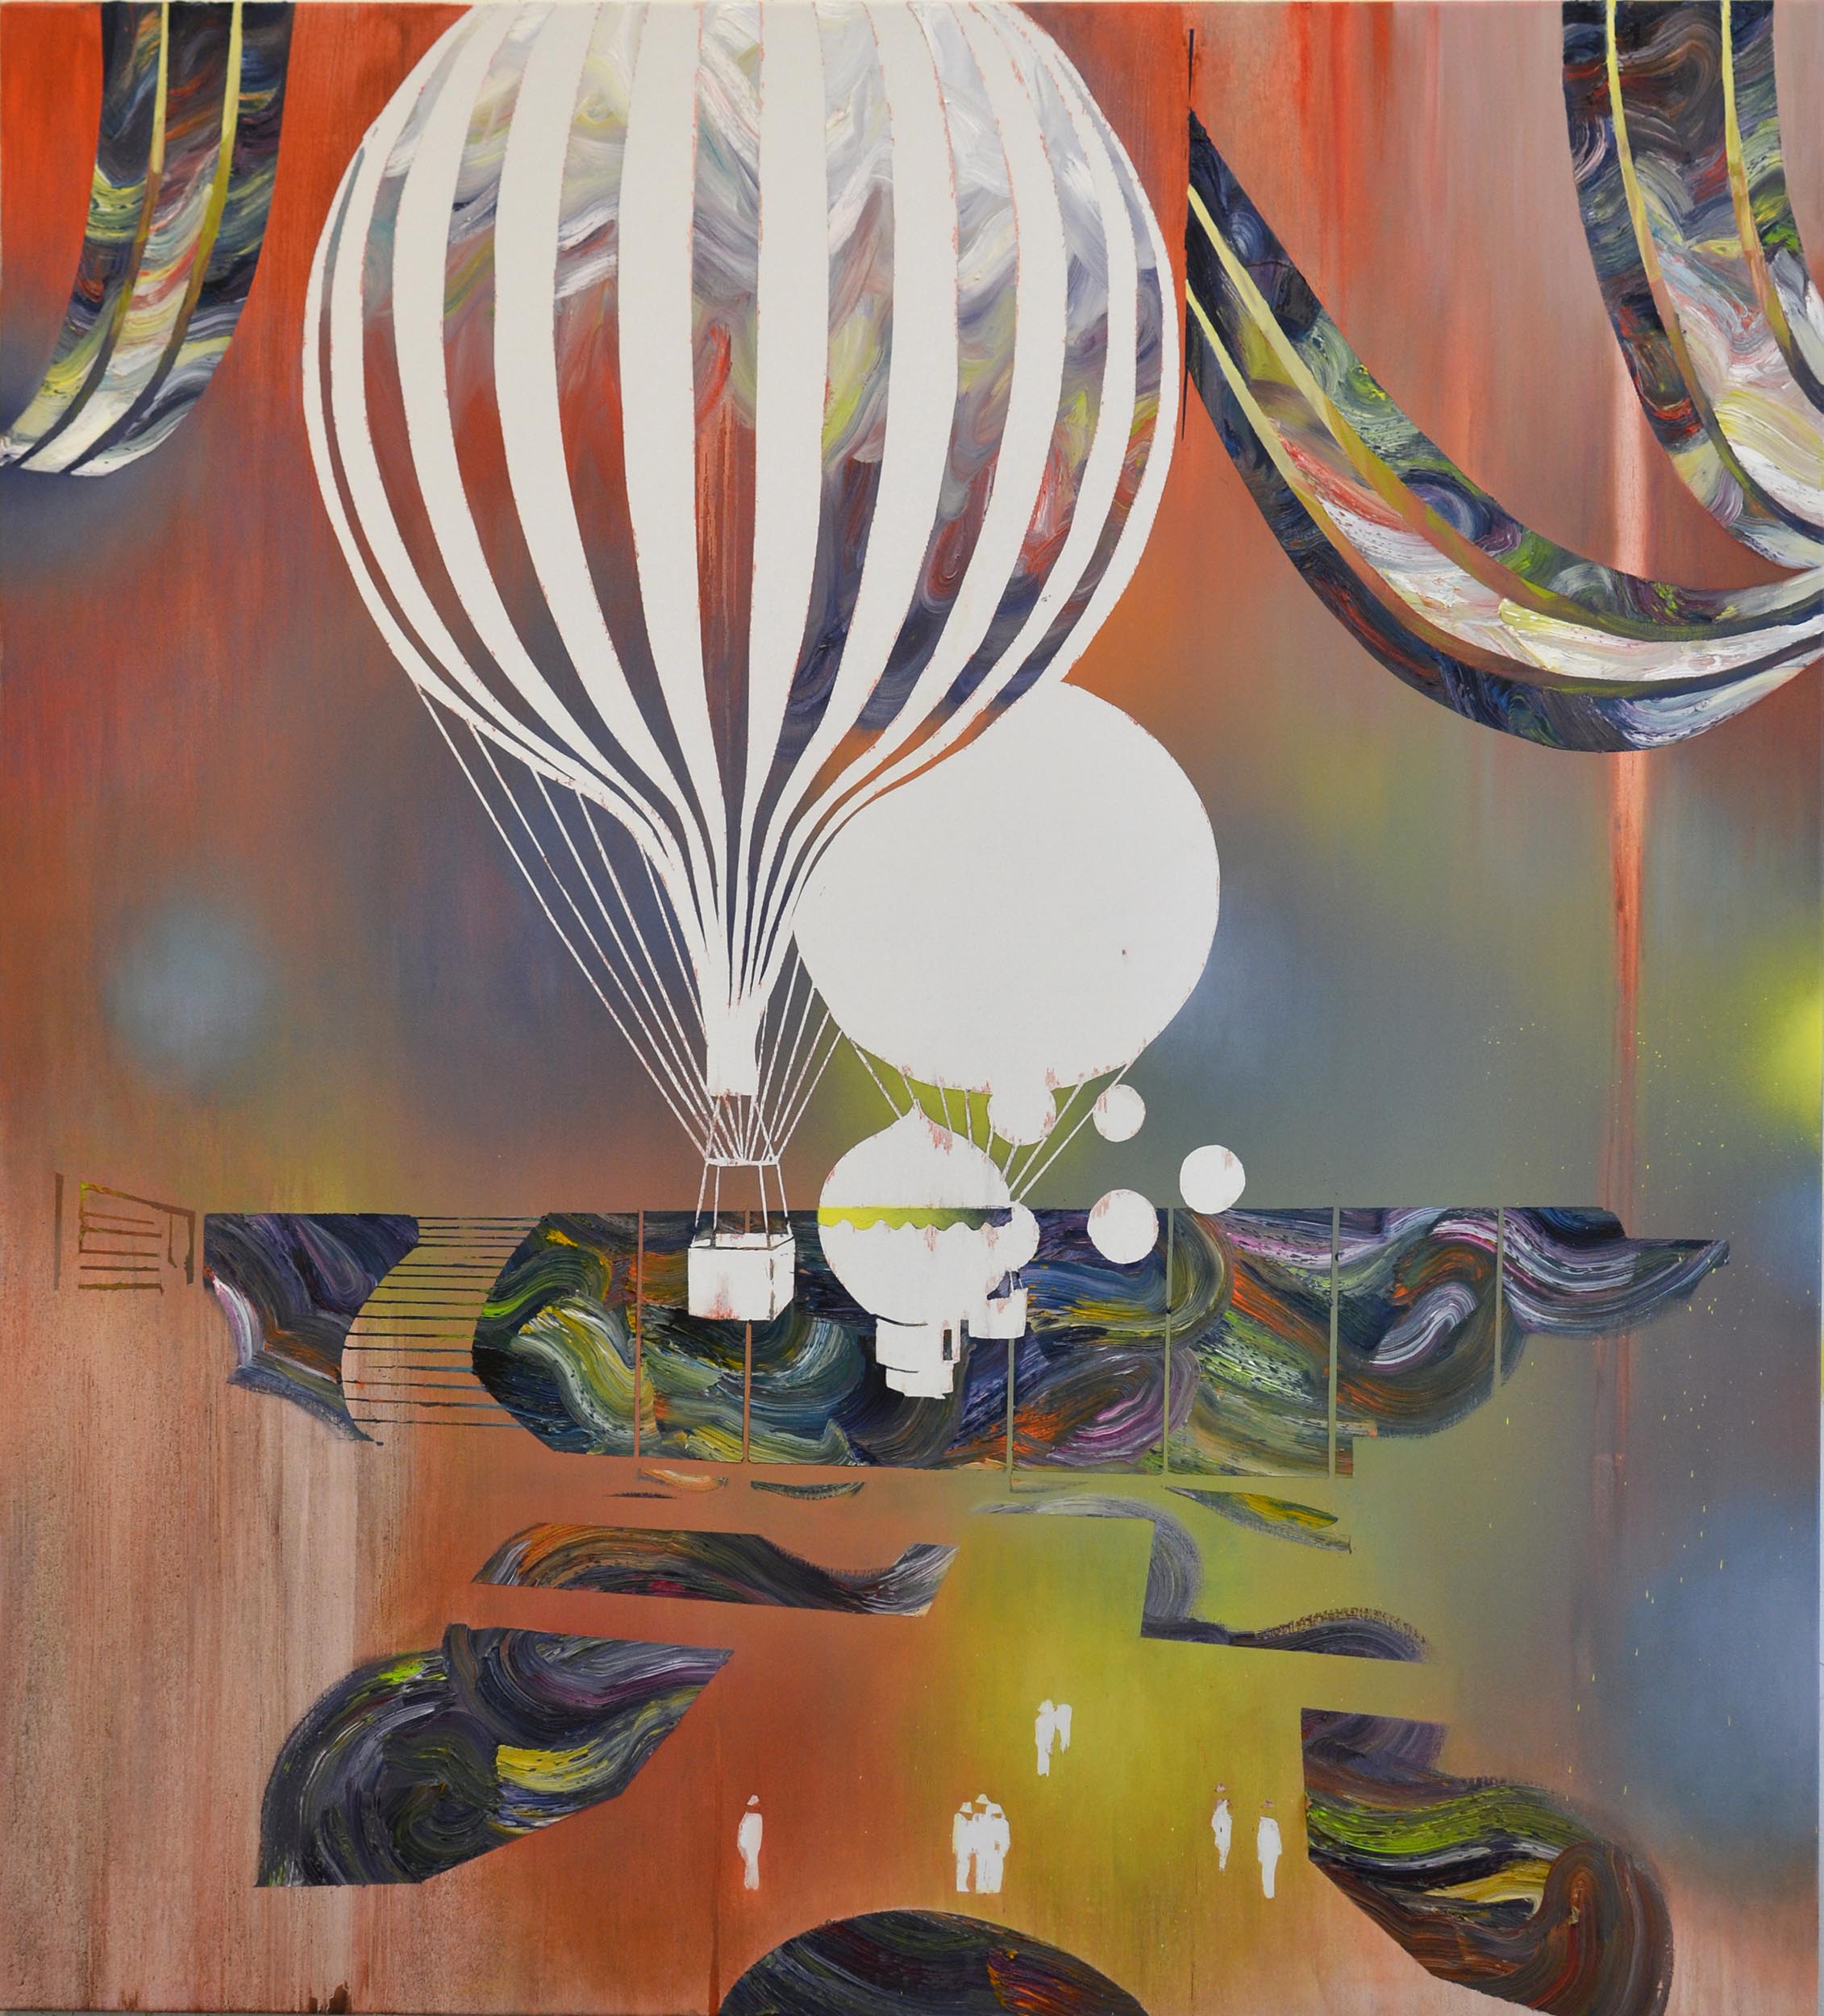   Ballon  oil on canvas 160 x 140 cm, 2013 